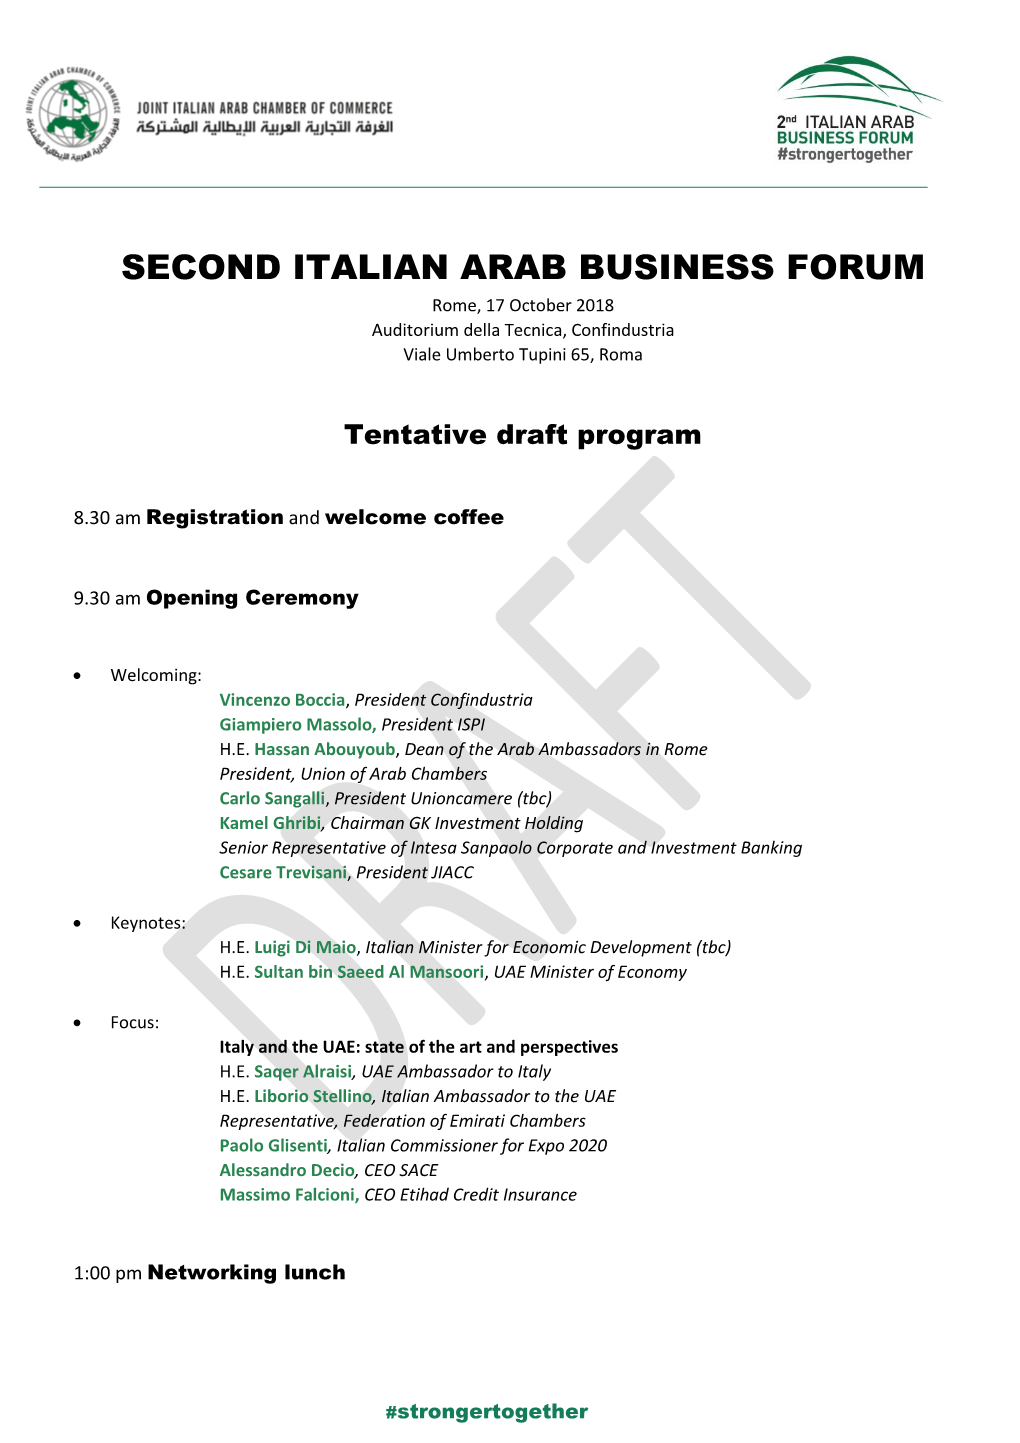 SECOND ITALIAN ARAB BUSINESS FORUM Rome, 17 October 2018 Auditorium Della Tecnica, Confindustria Viale Umberto Tupini 65, Roma